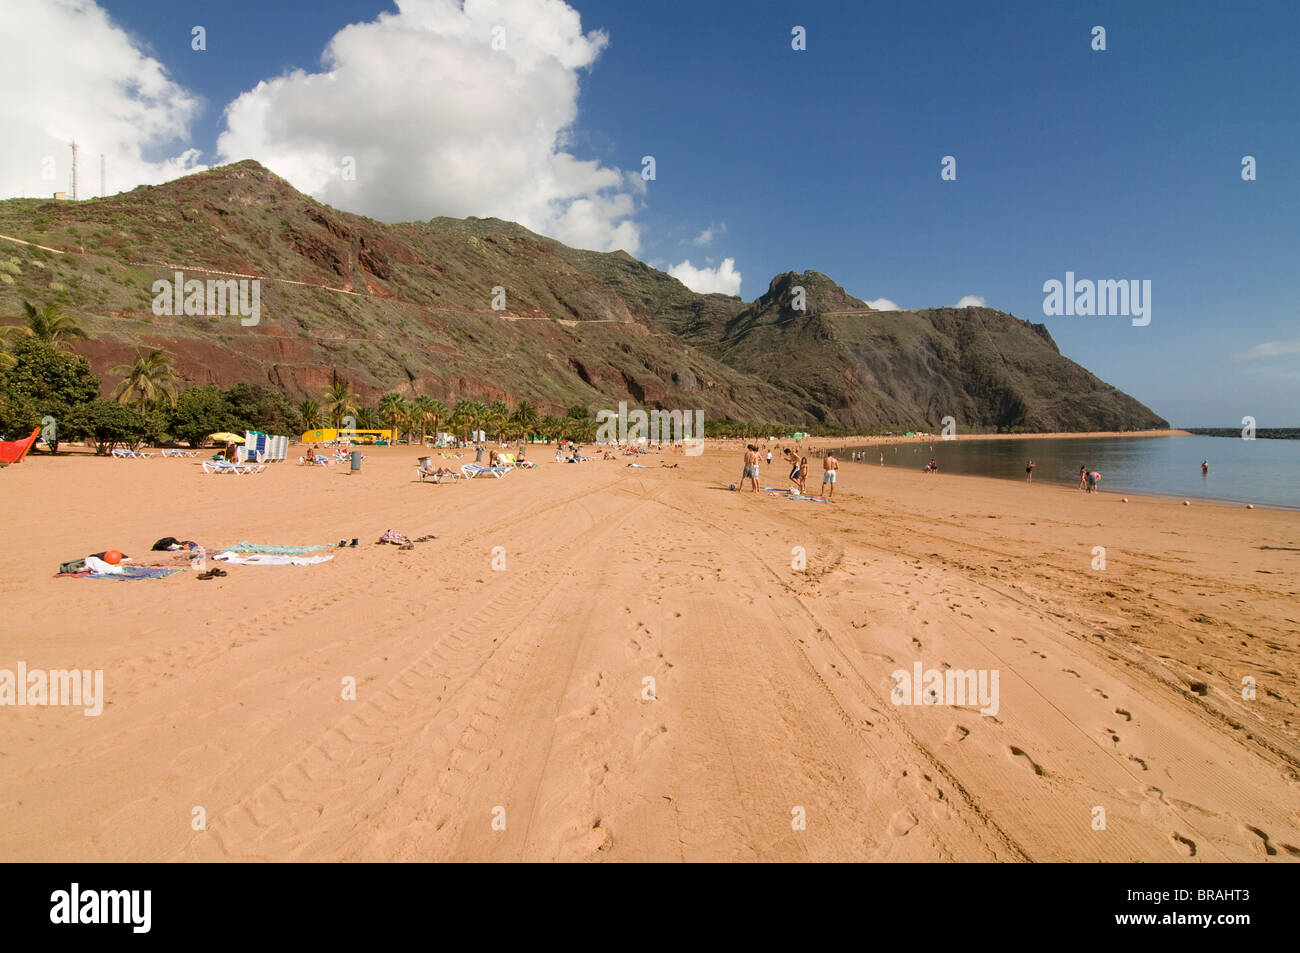 La plage Playa Teresita, Tenerife, Canaries, Espagne, Europe, Atlantique Banque D'Images